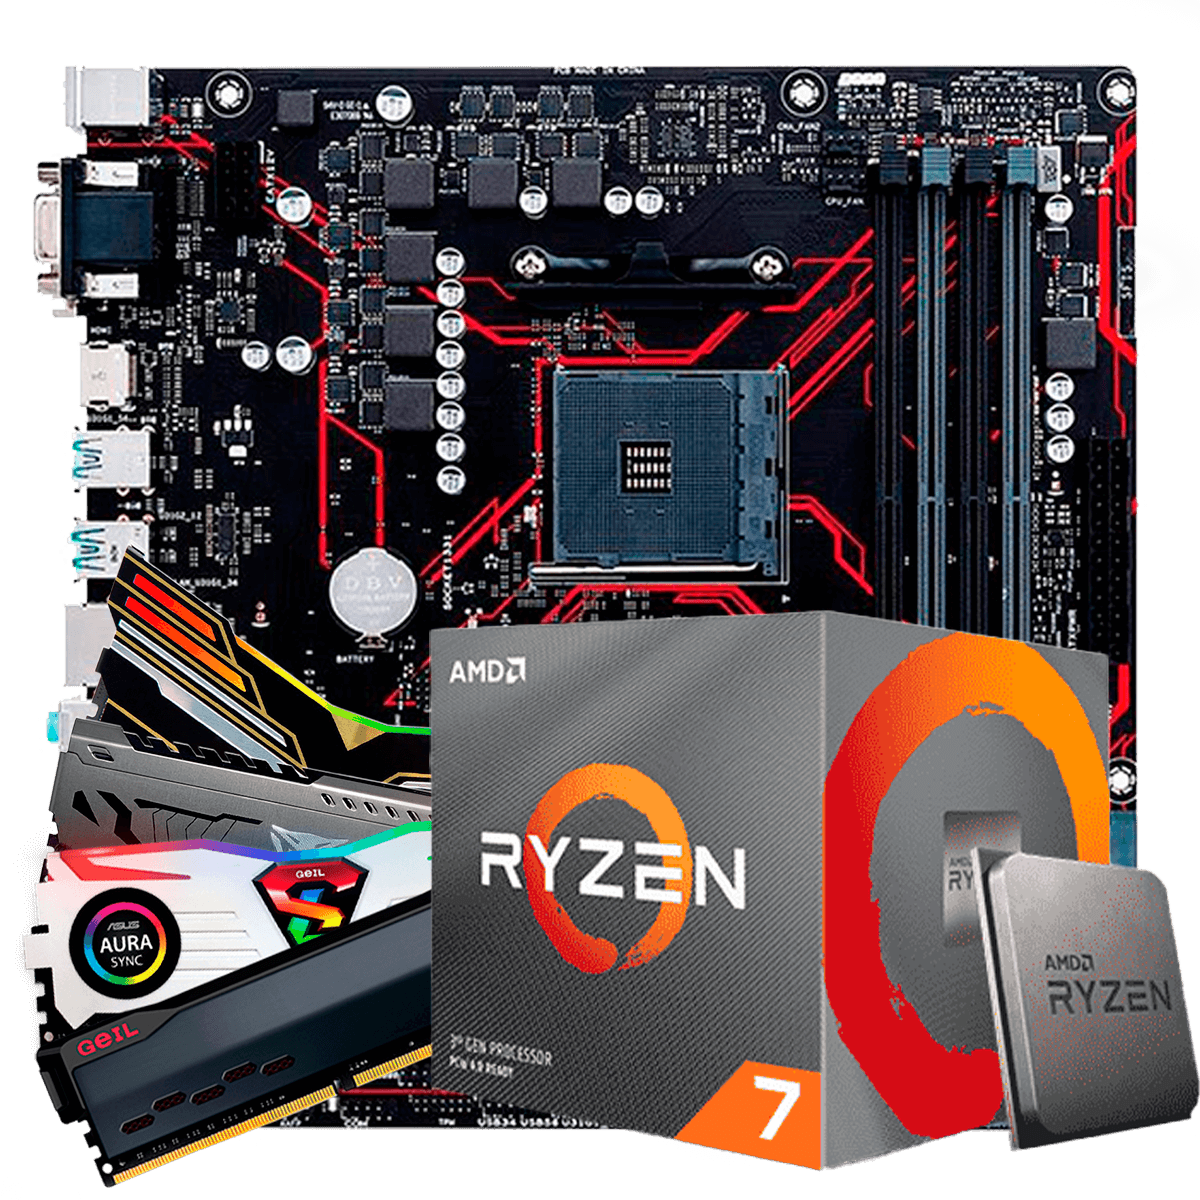 Kit Upgrade, AMD Ryzen 7 3700X, Asus Prime B450M Gaming/BR, Memória DDR4 8GB 3000MHz